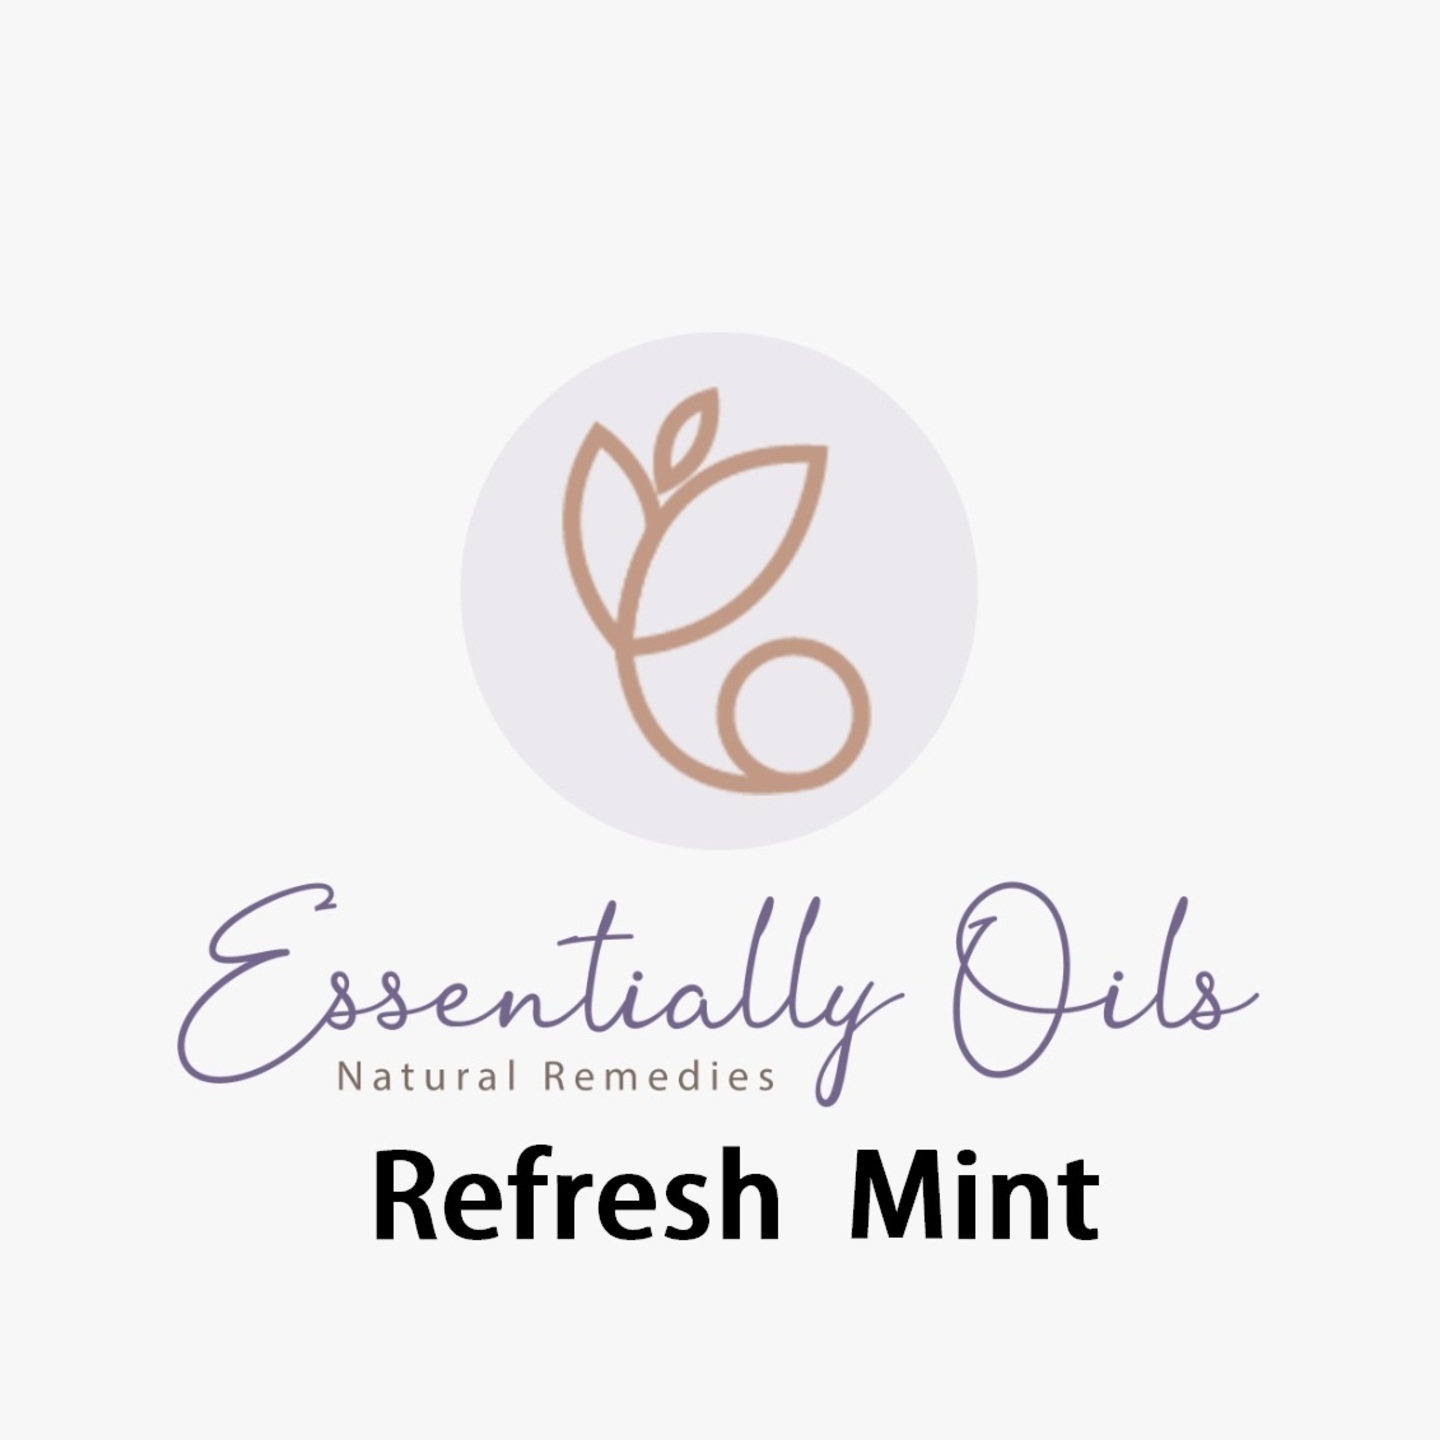 Refreshing Mint - Uplifting blend